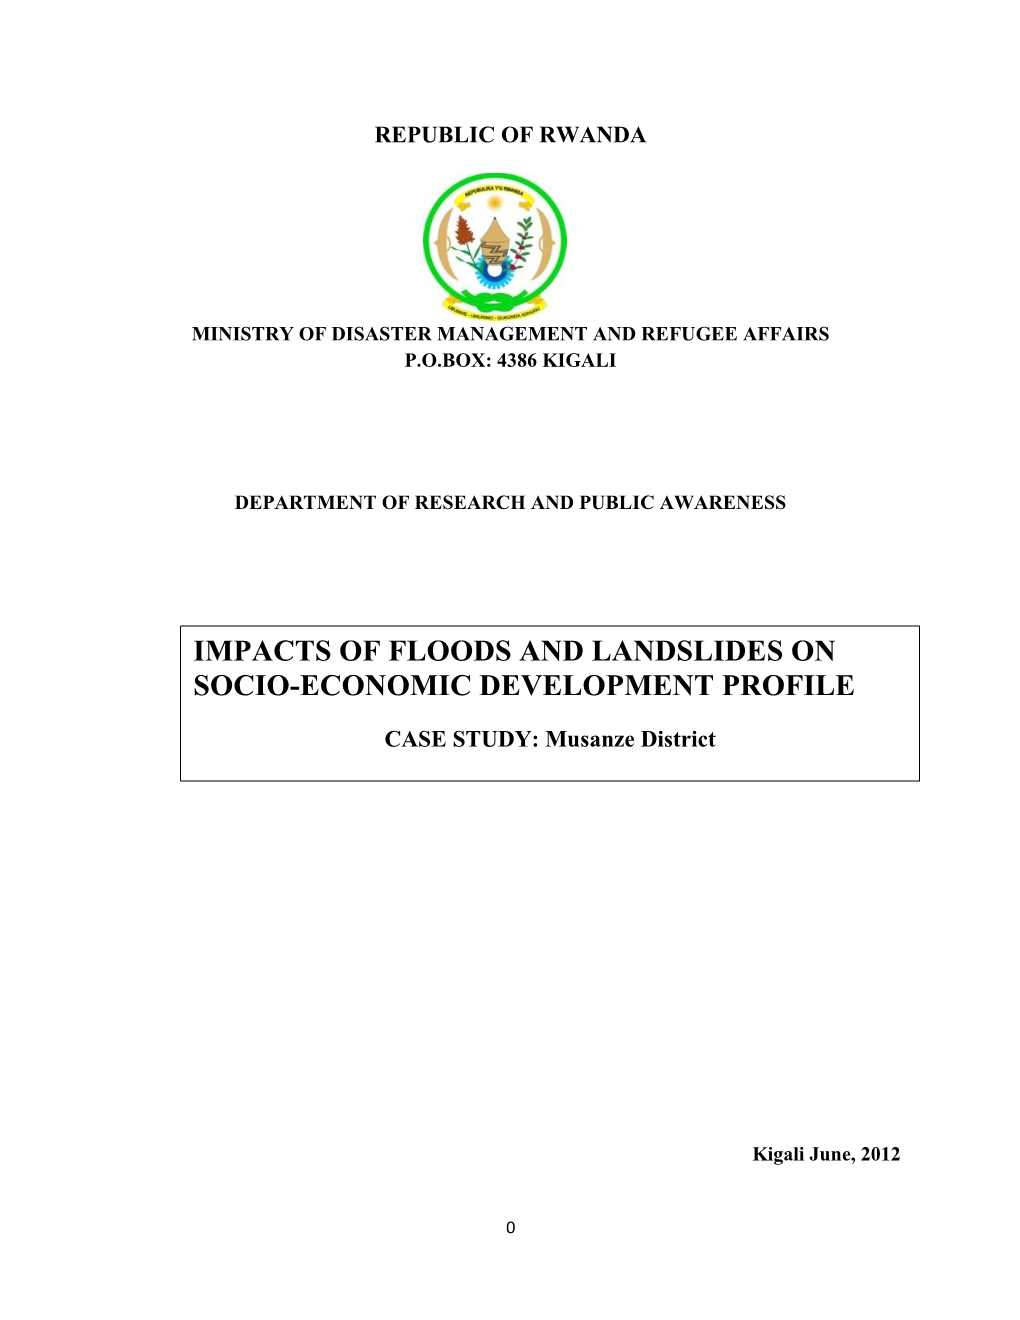 Impacts of Floods and Landslides on Socio-Economic Development Profile